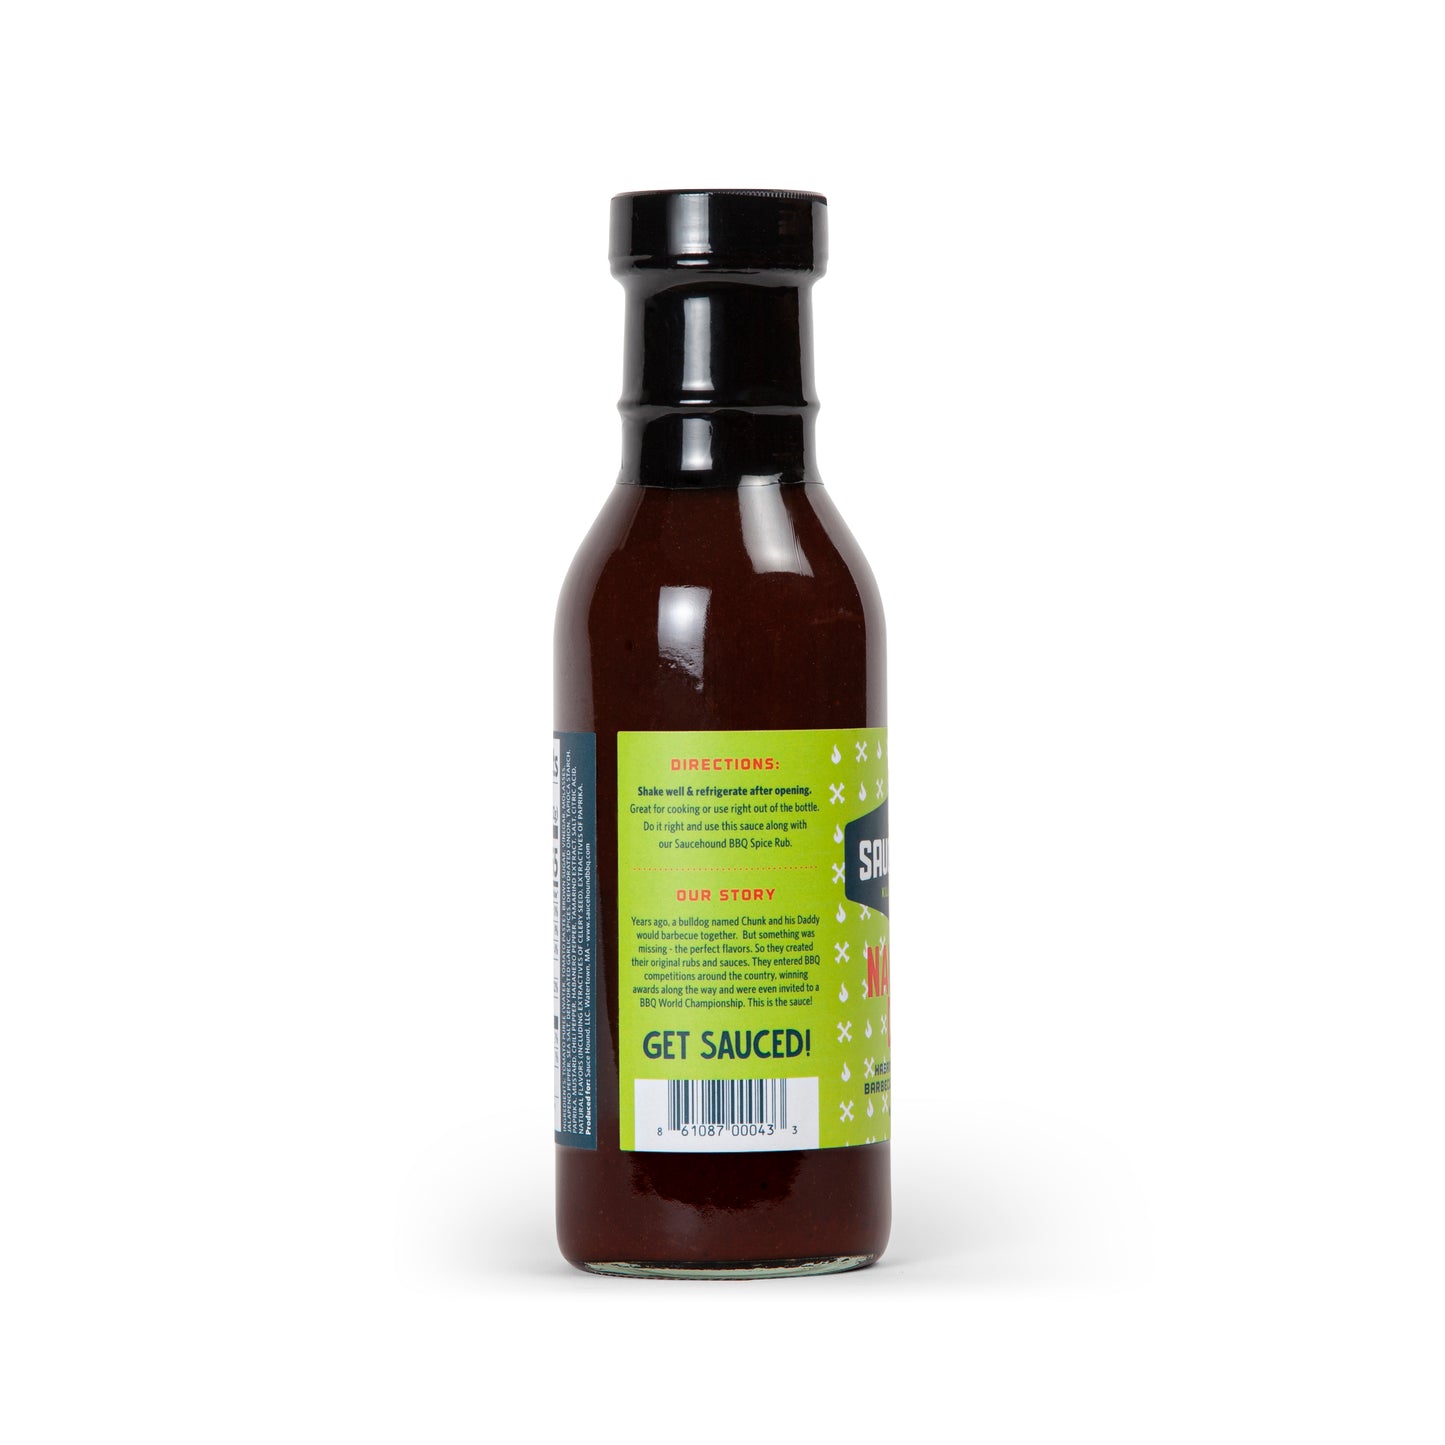 Saucehound Naughty Dog Habanero & Jalapeno BBQ Sauce (14.8oz Glass Bottle)